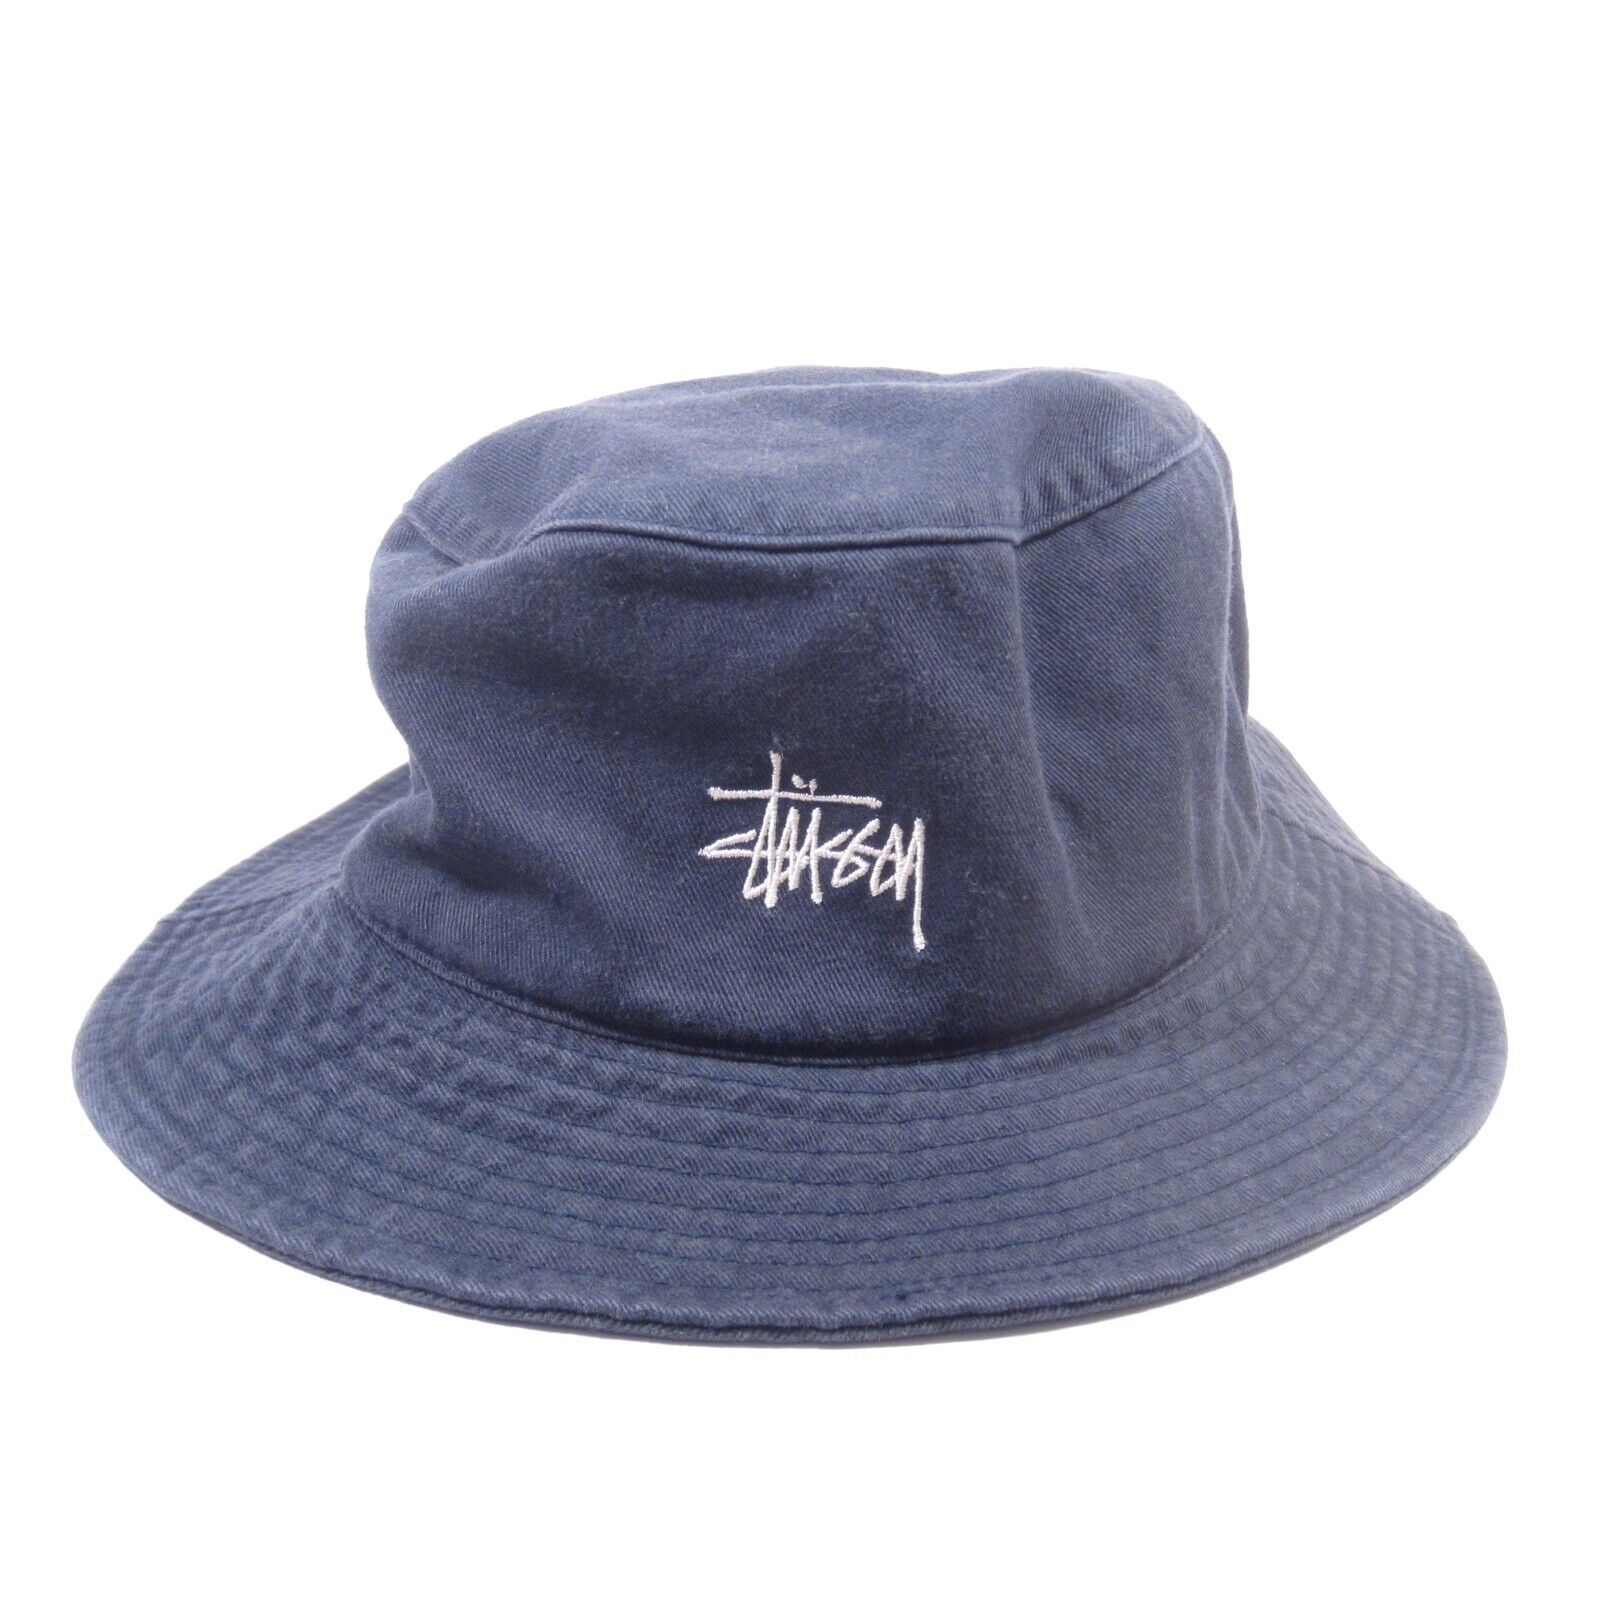 Vintage Stussy Bucket Hat Navy Blue Size Small/Medium | eBay